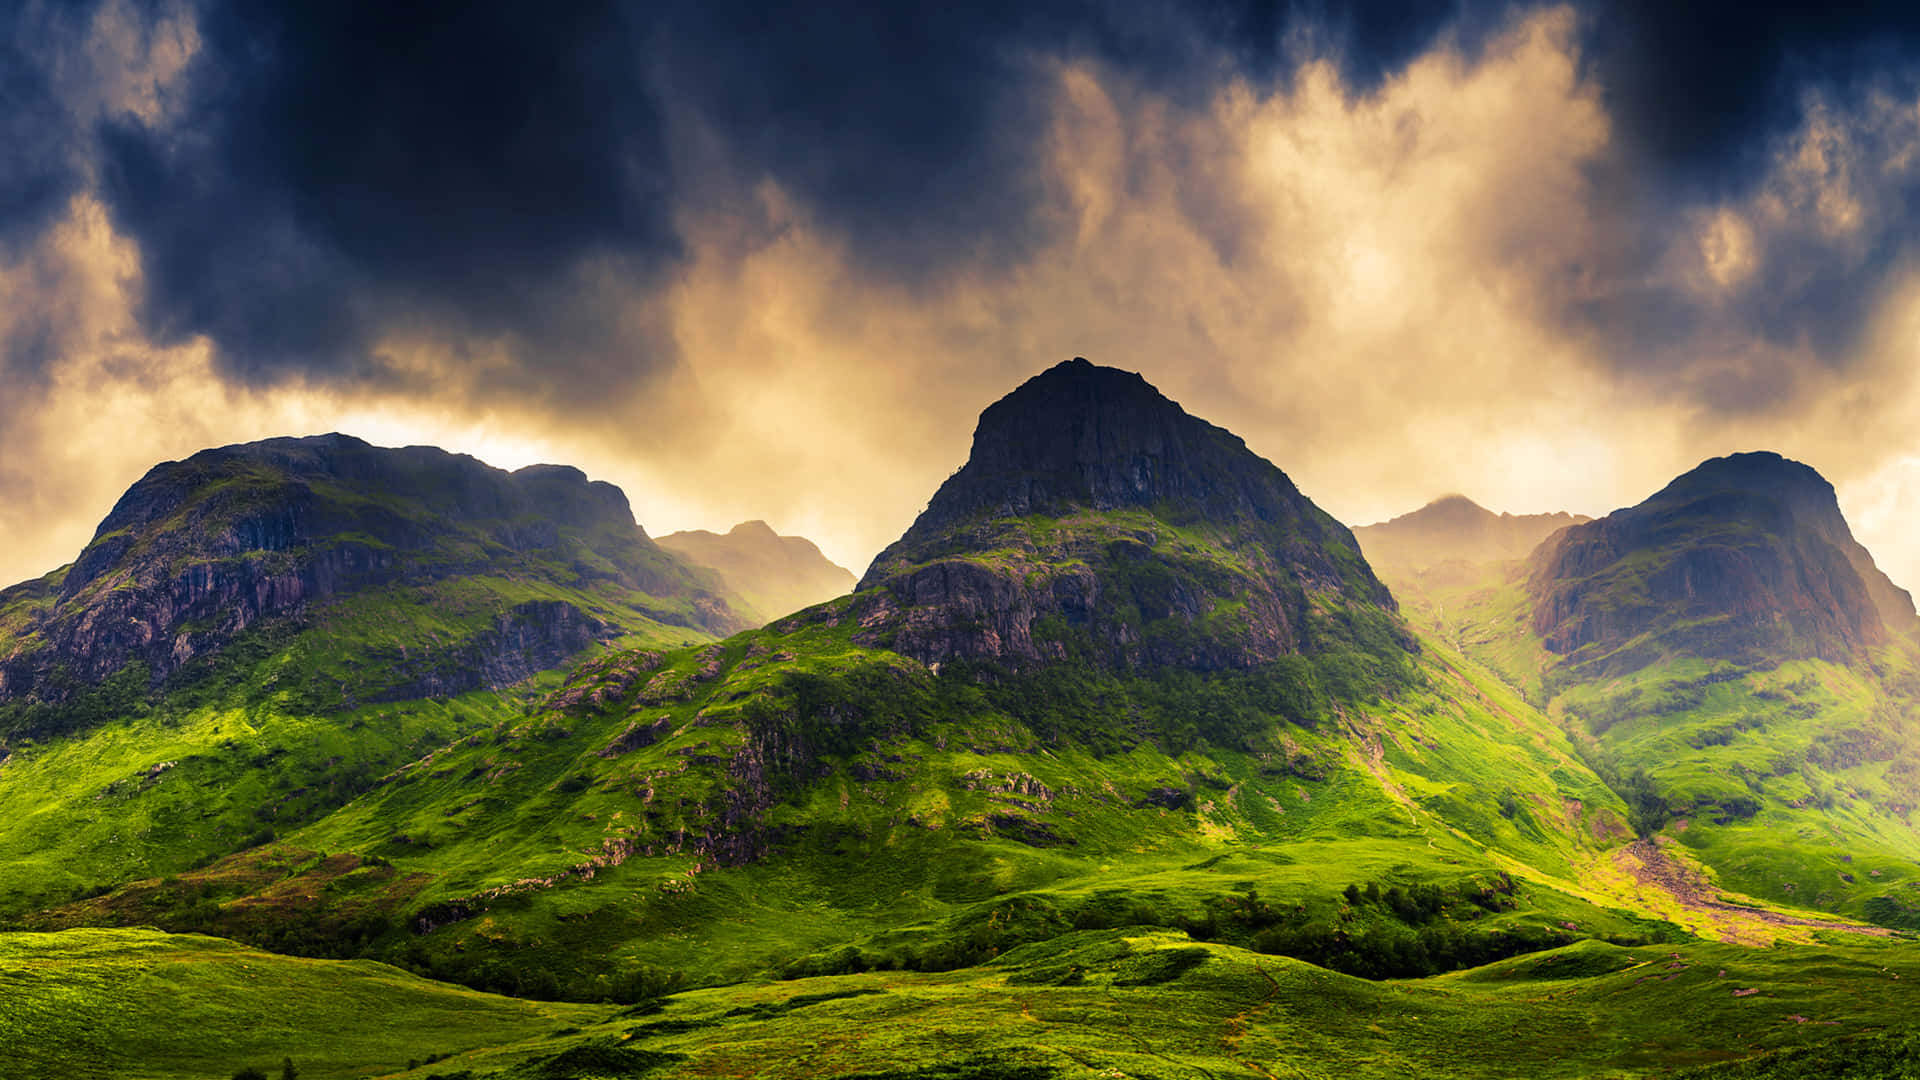 Fondode Pantalla Para Escritorio De Escocia - Captura La Belleza De Las Tierras Altas De Escocia Fondo de pantalla